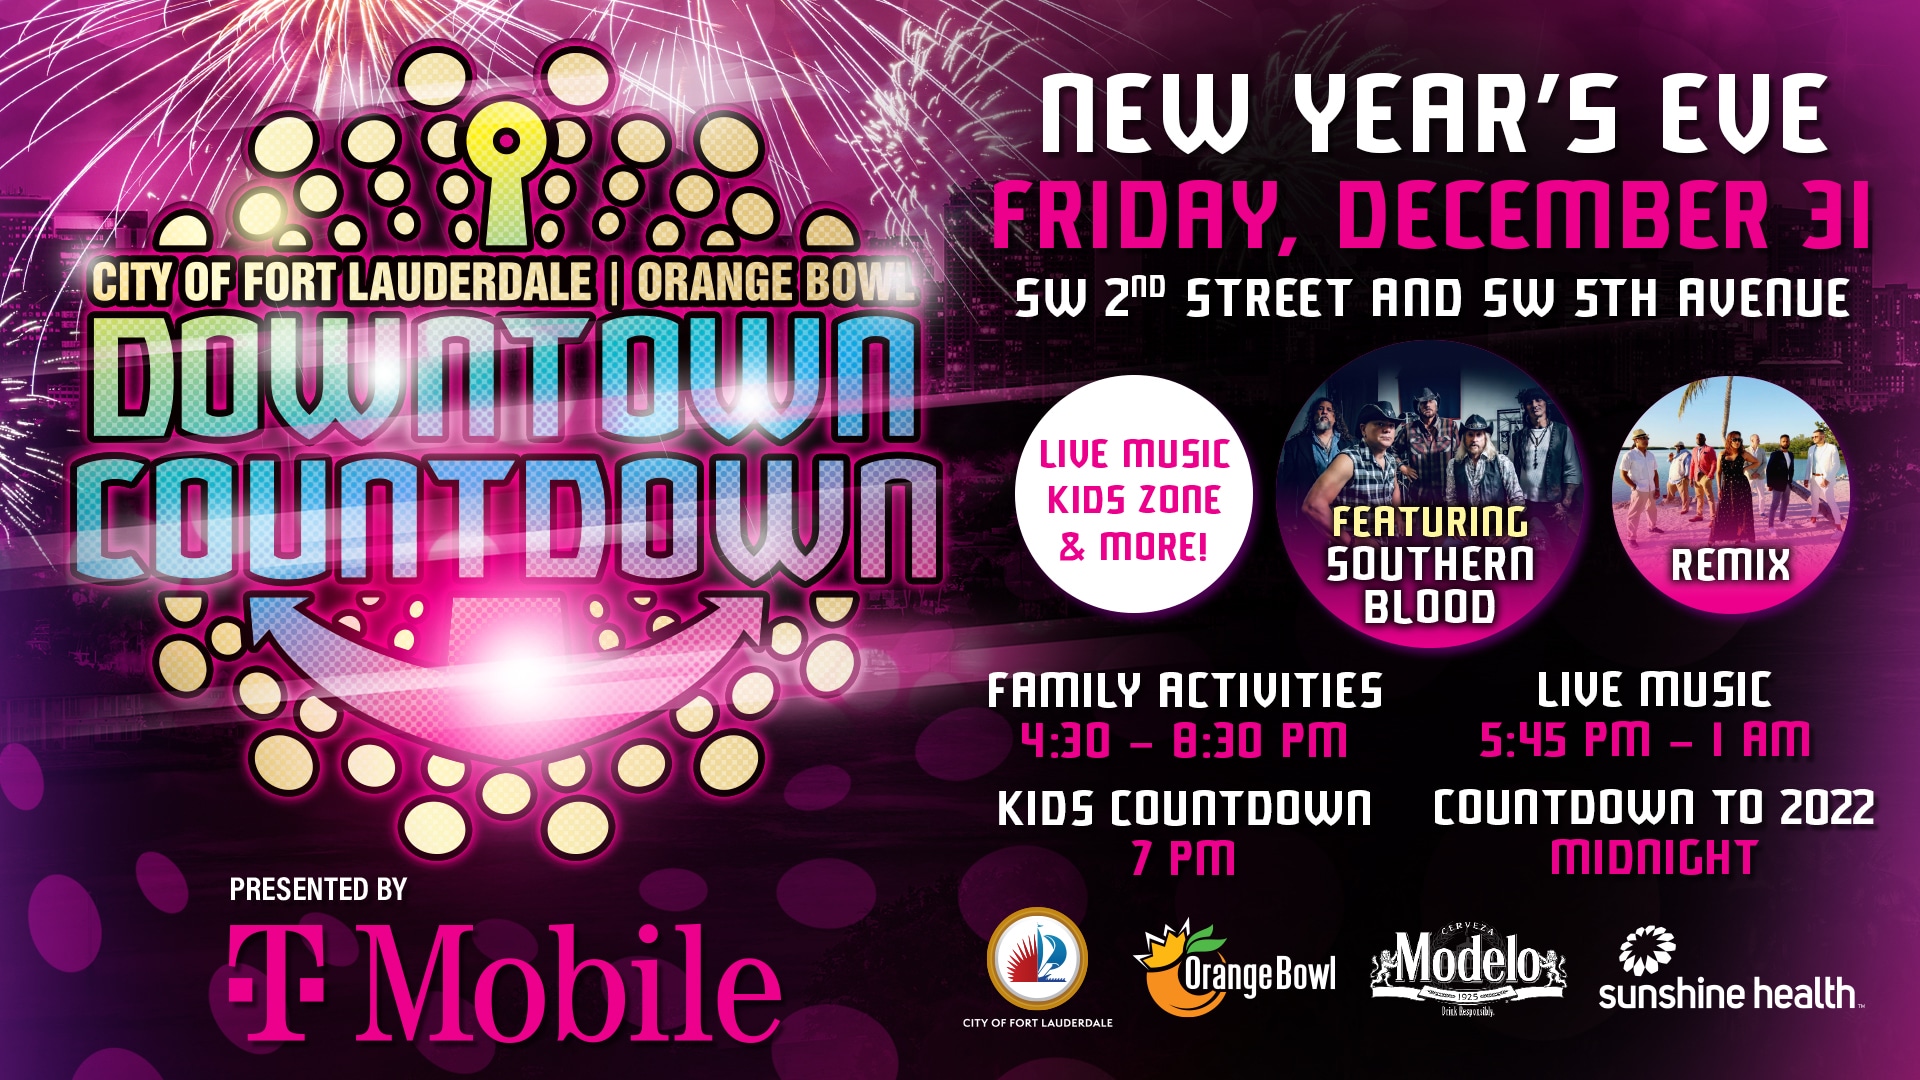 Downtown Countdown New Year's Eve Las Olas Association